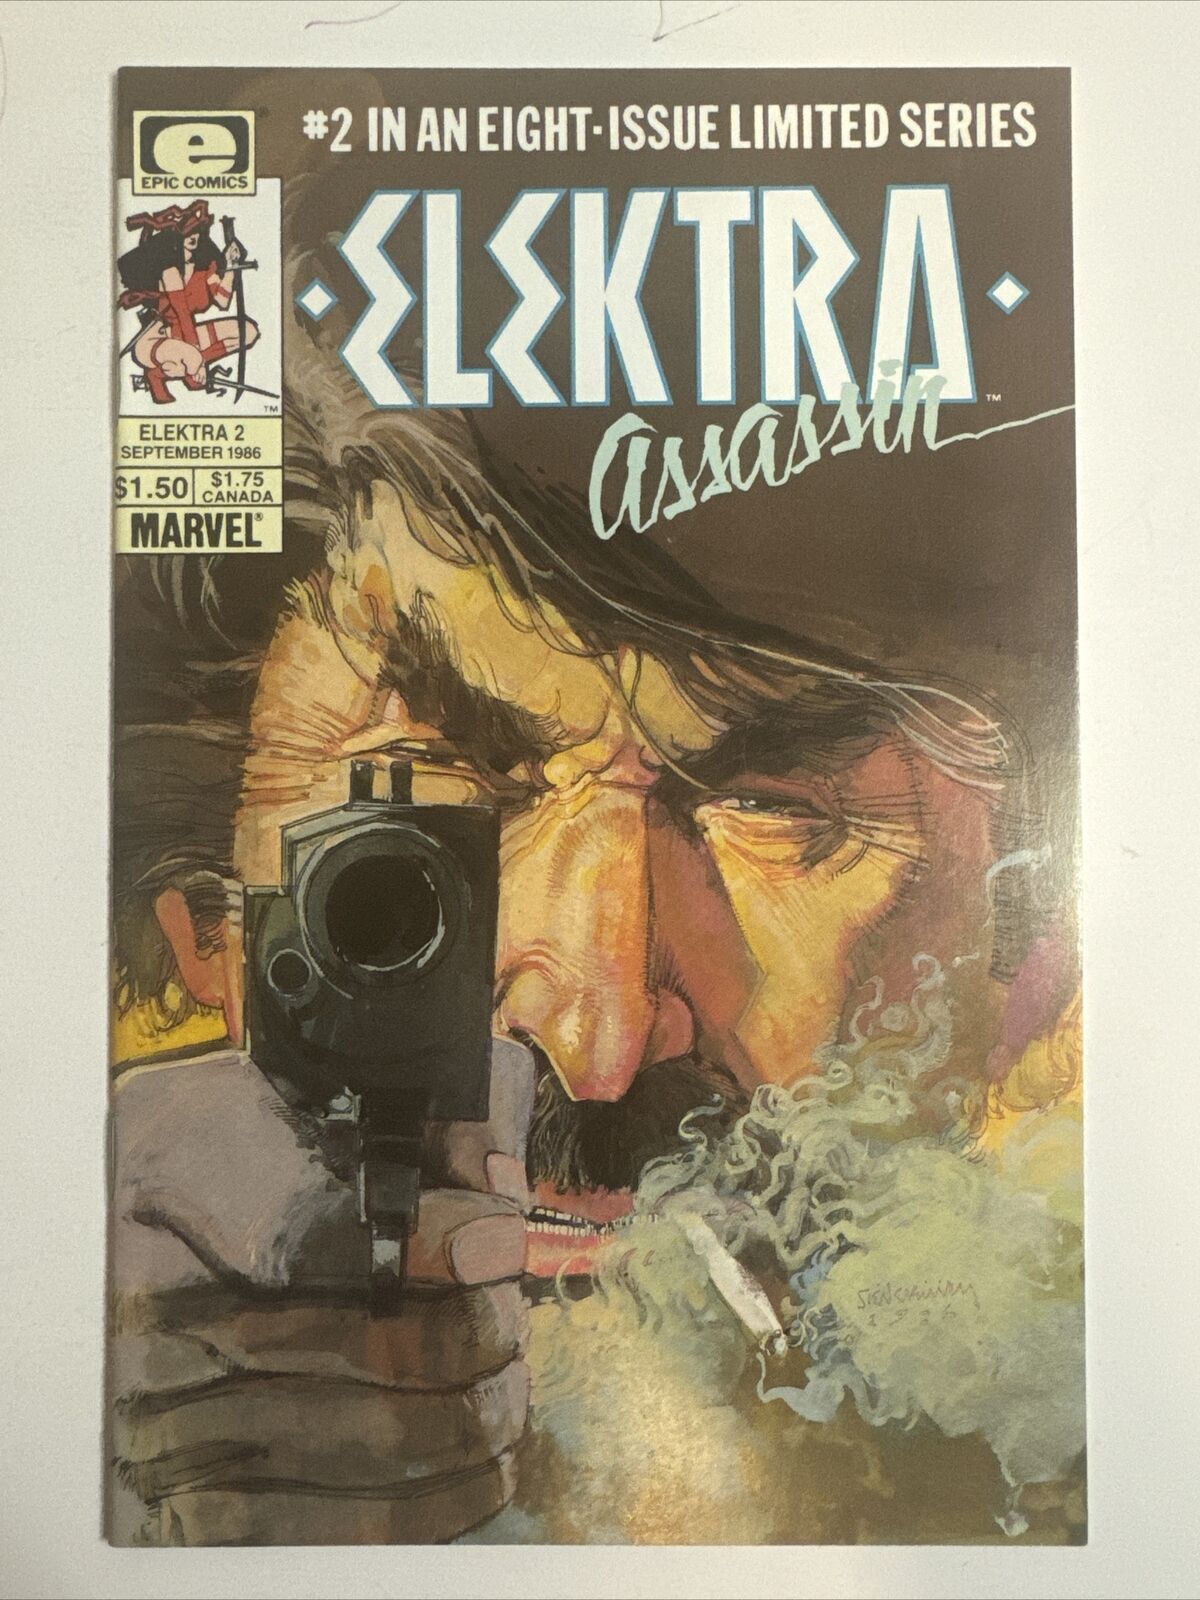 Elektra Assassin #2: “The Ugly Man” Frank Miller, Epic Comics 1986 NM